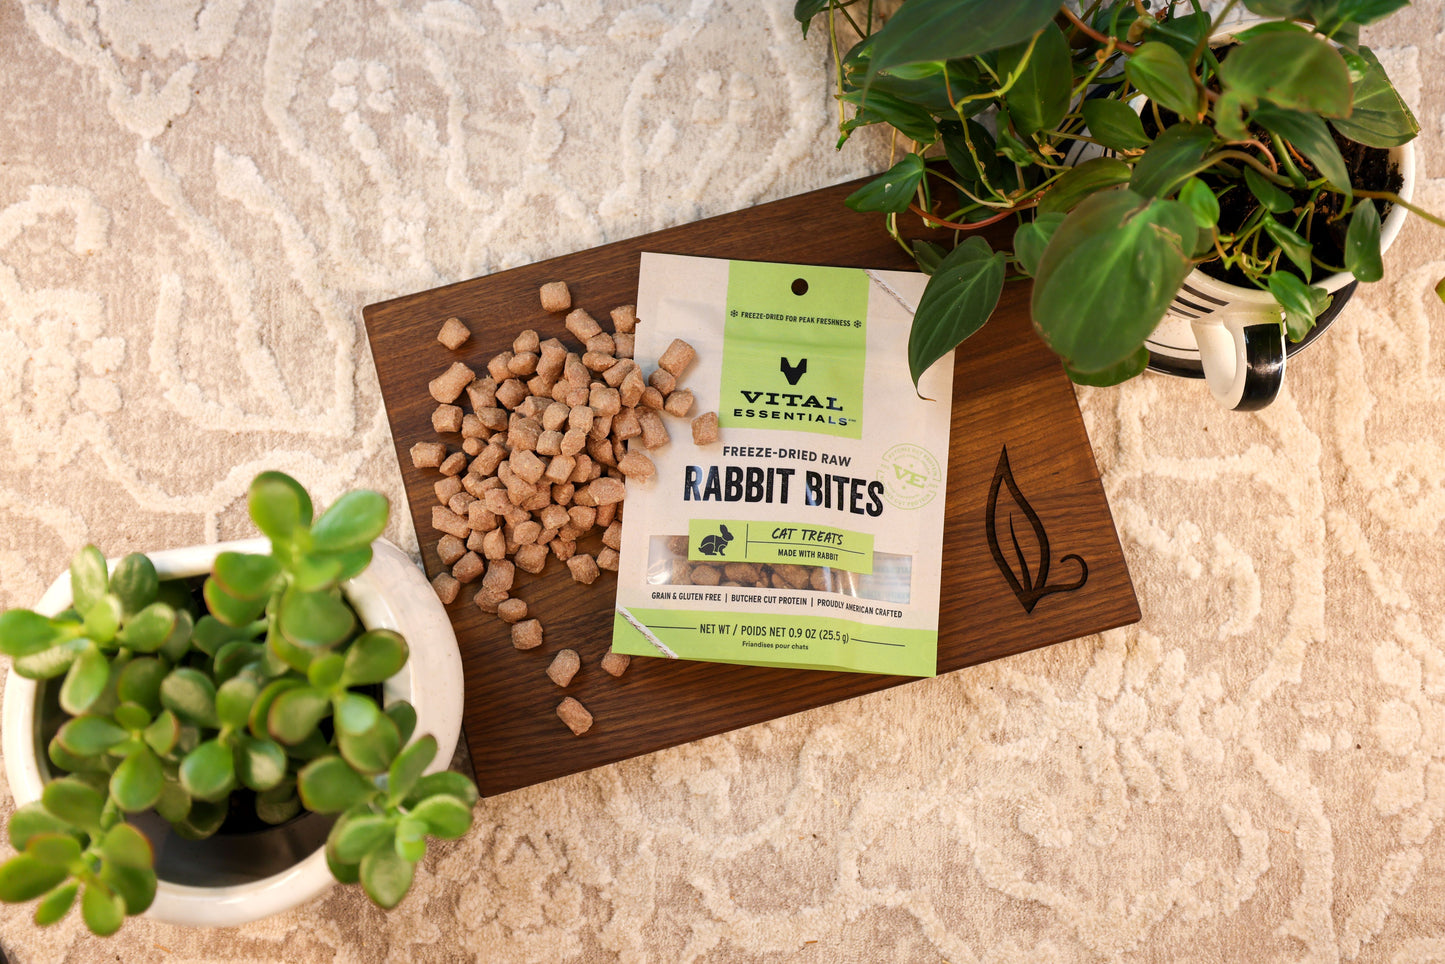 Vital Essentials Freeze-Dried Rabbit Bites - Treats for Cats